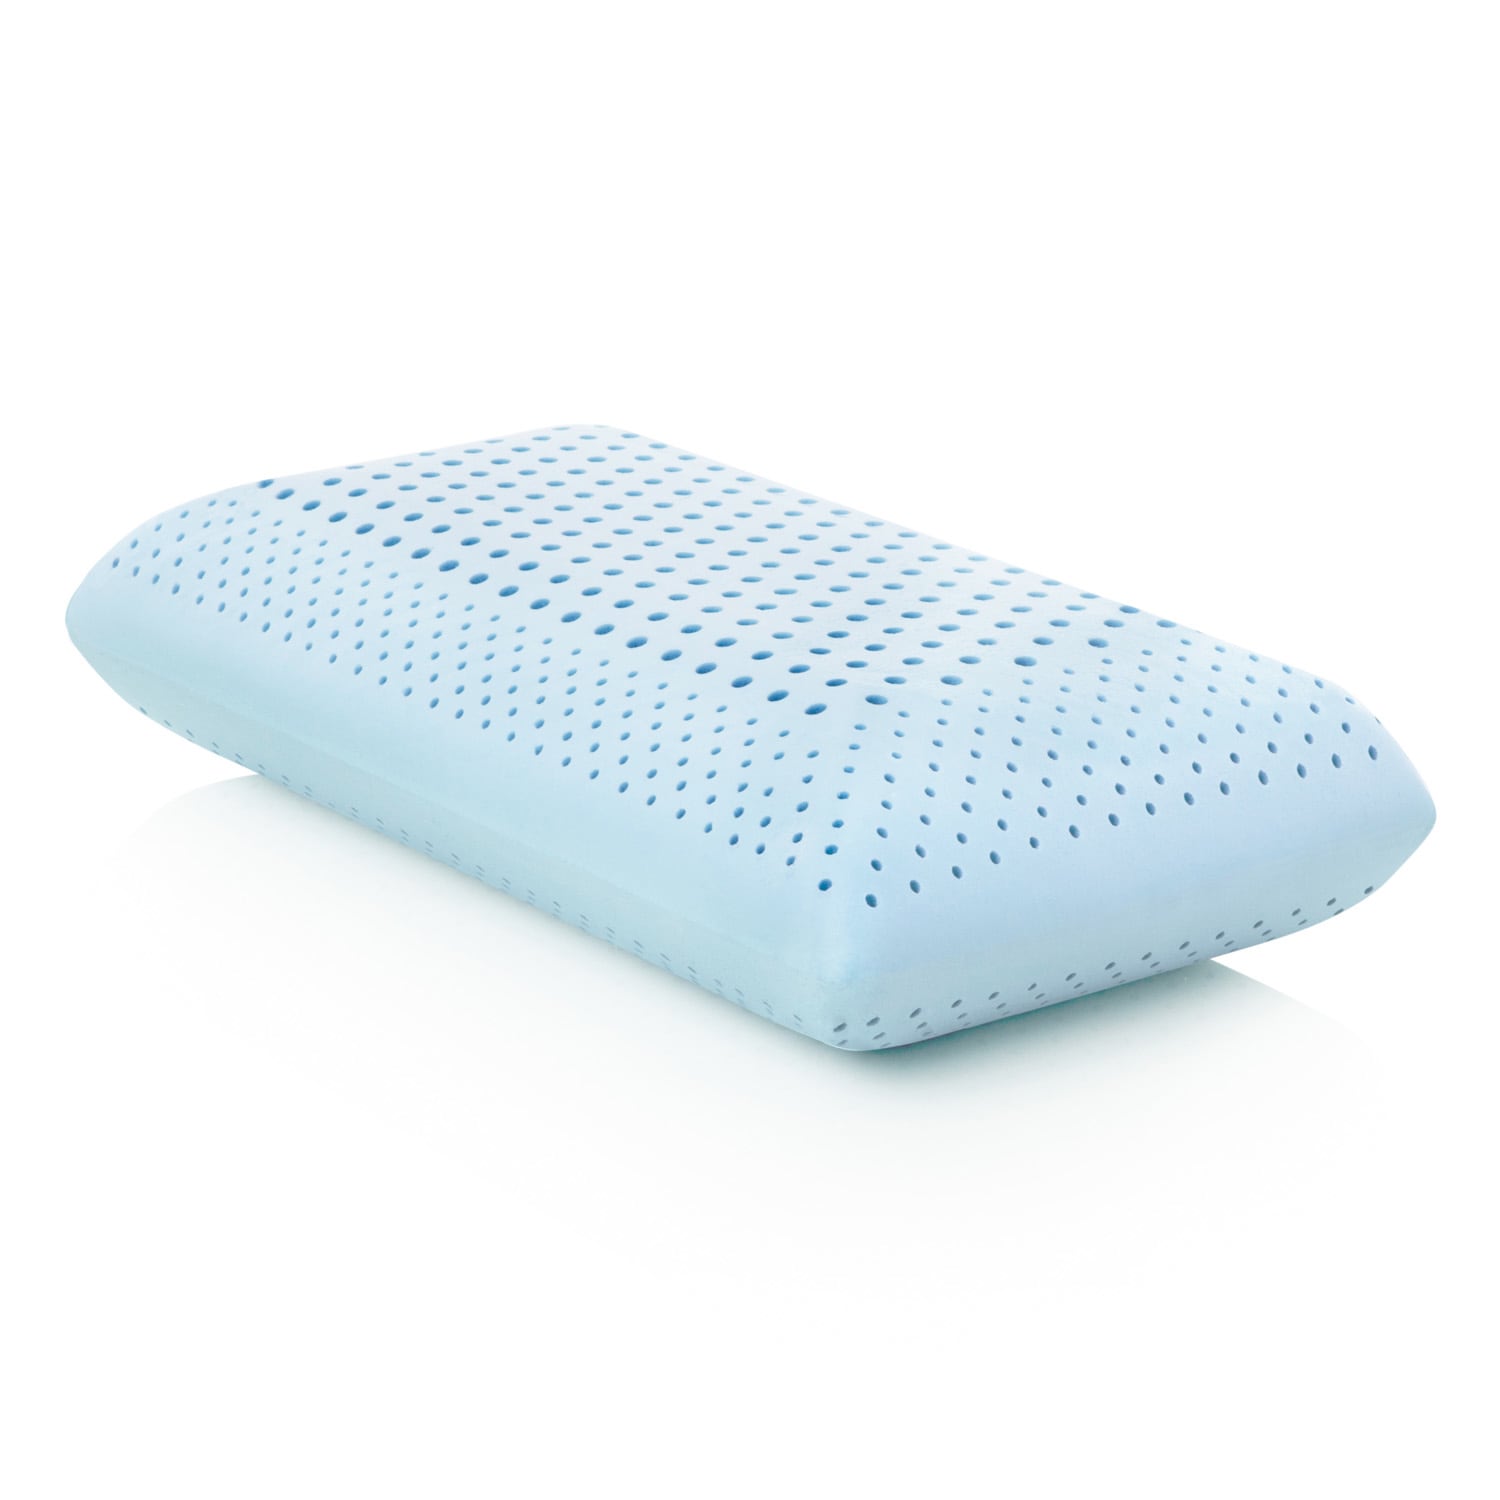  Comfort Revolution Blue Bubble Gel + Memory Foam Pillow,  Standard (Pack of 1), White : Home & Kitchen